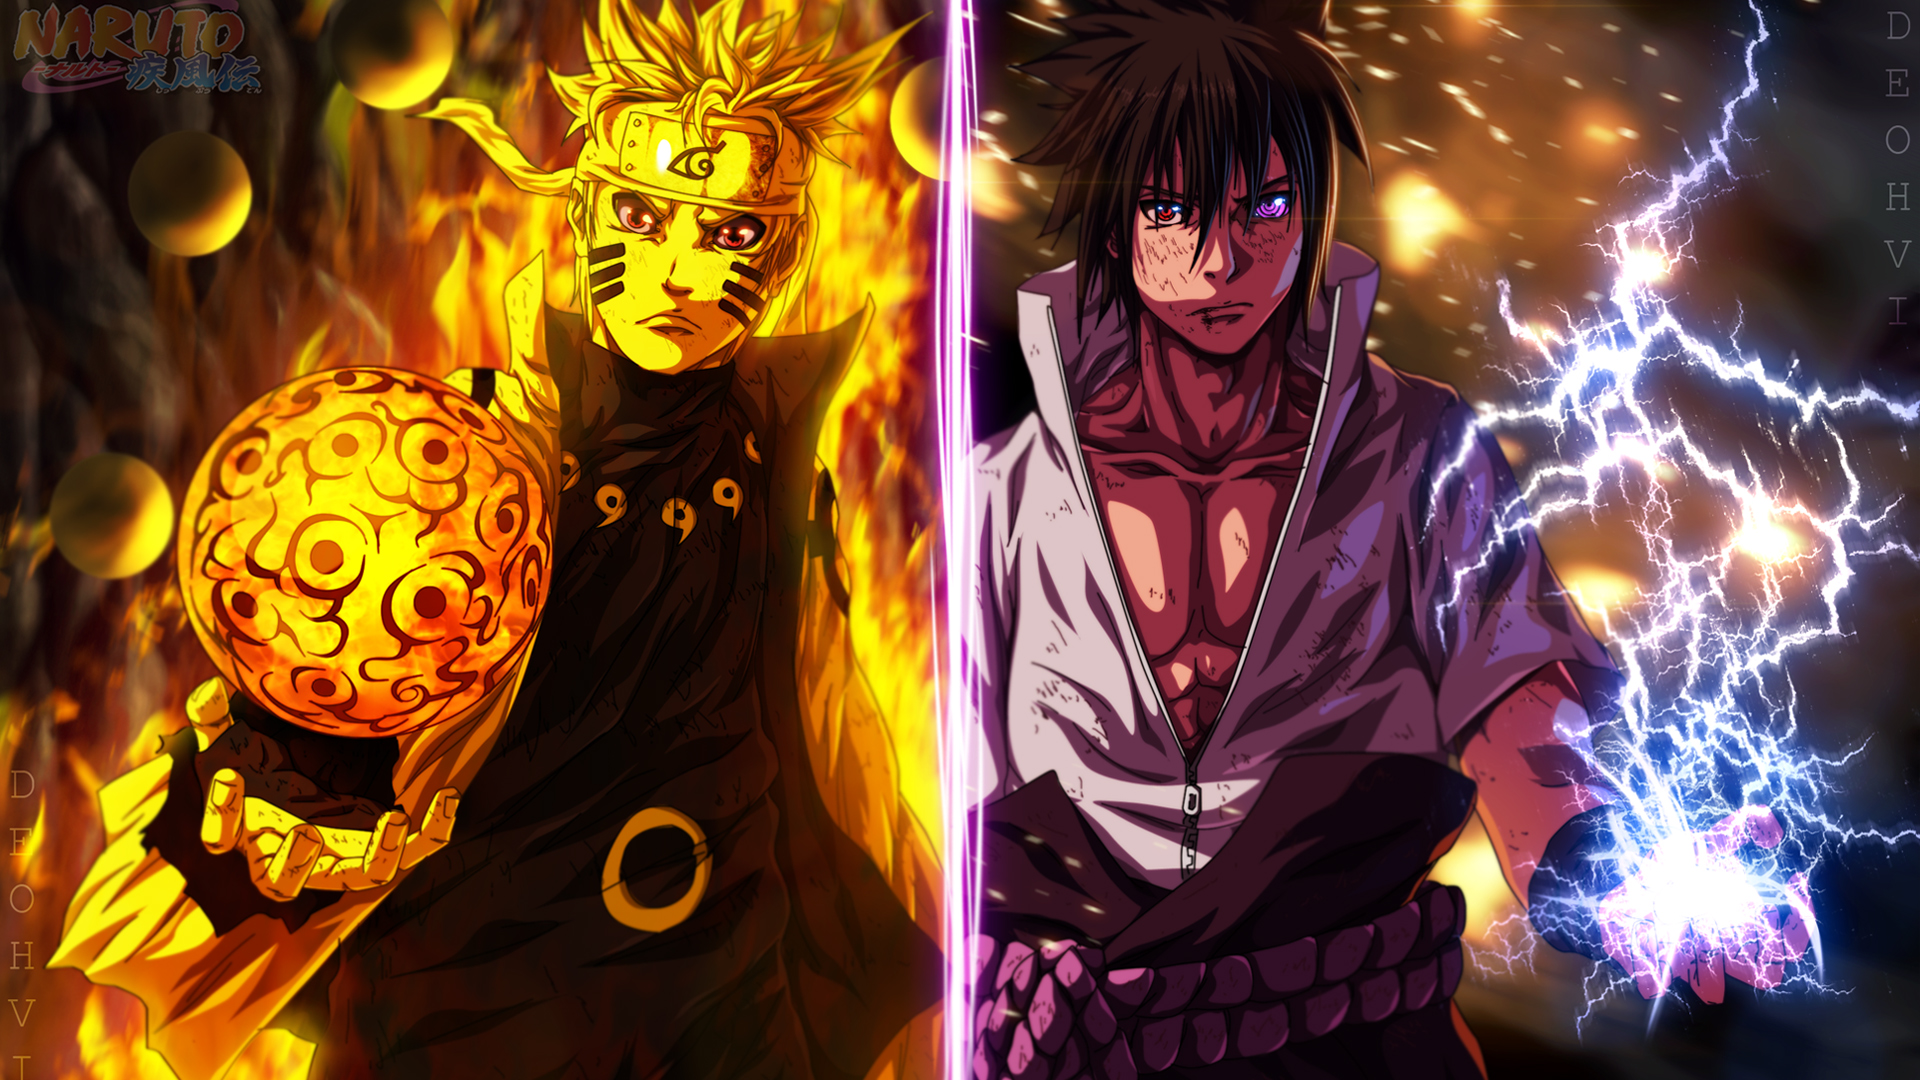 sasuke wallpaper,anime,cg artwork,darkness,illustration,fictional character